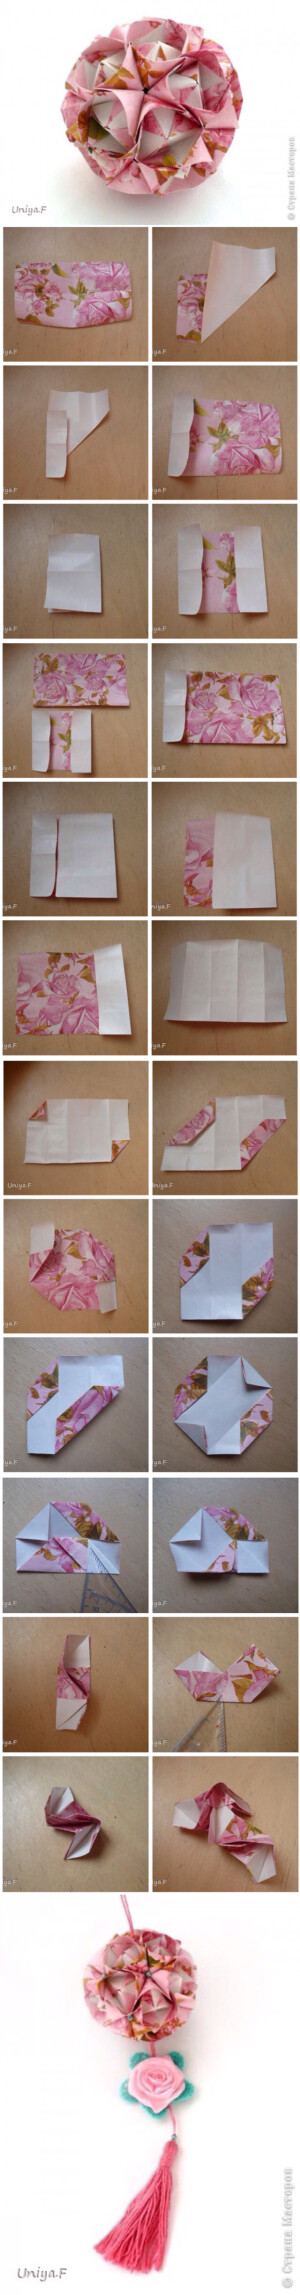 Name: Mariel Designer: Uniya Filonova Units: 30 Paper: 6*10 cm (3:5) Final height: ~ 7 cm Joint: no glue